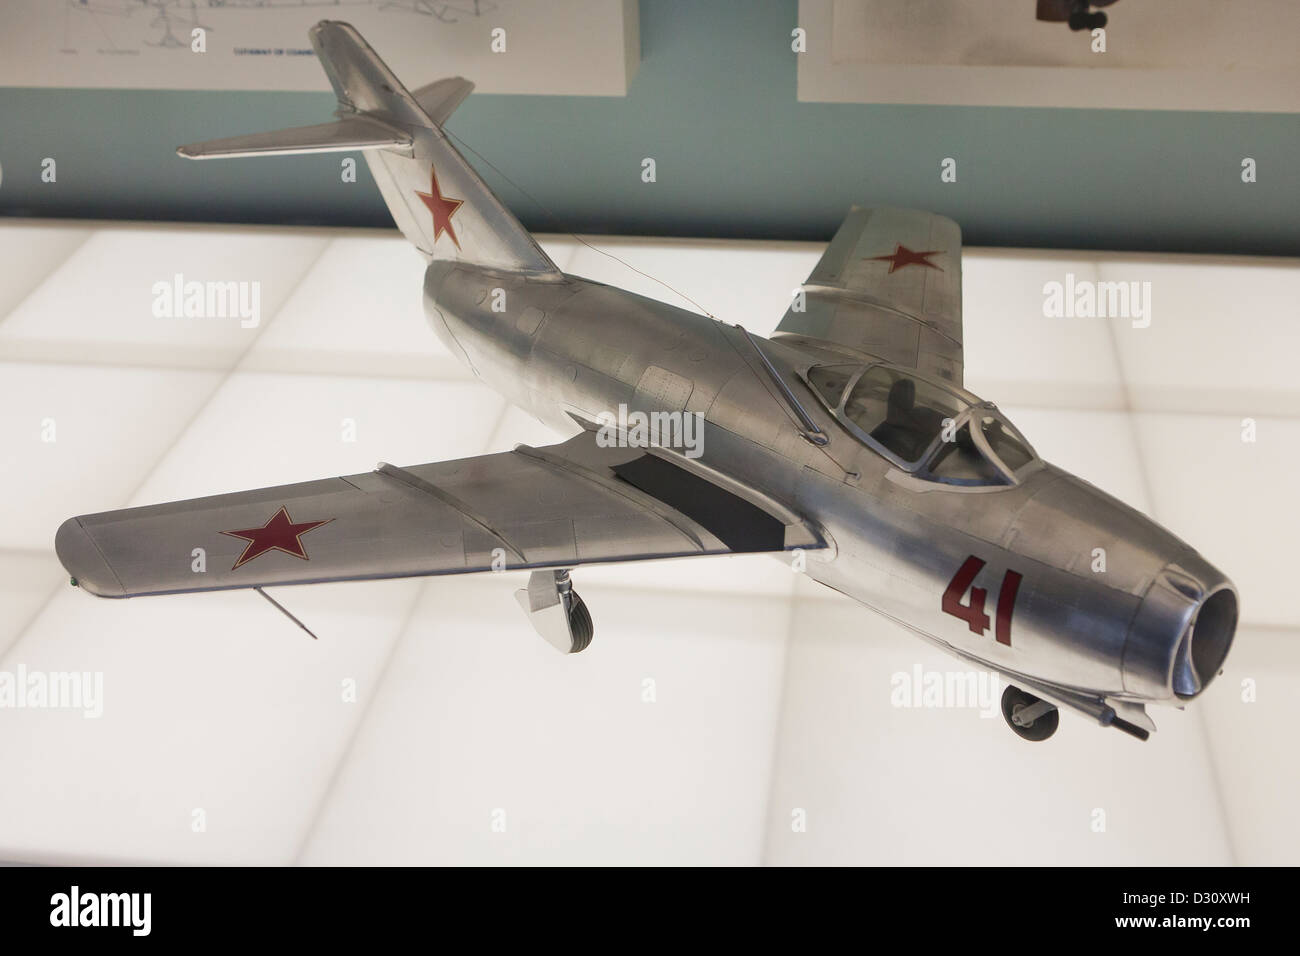 MiG-15 soviéticos bis jet fighter Aircraft model Foto de stock